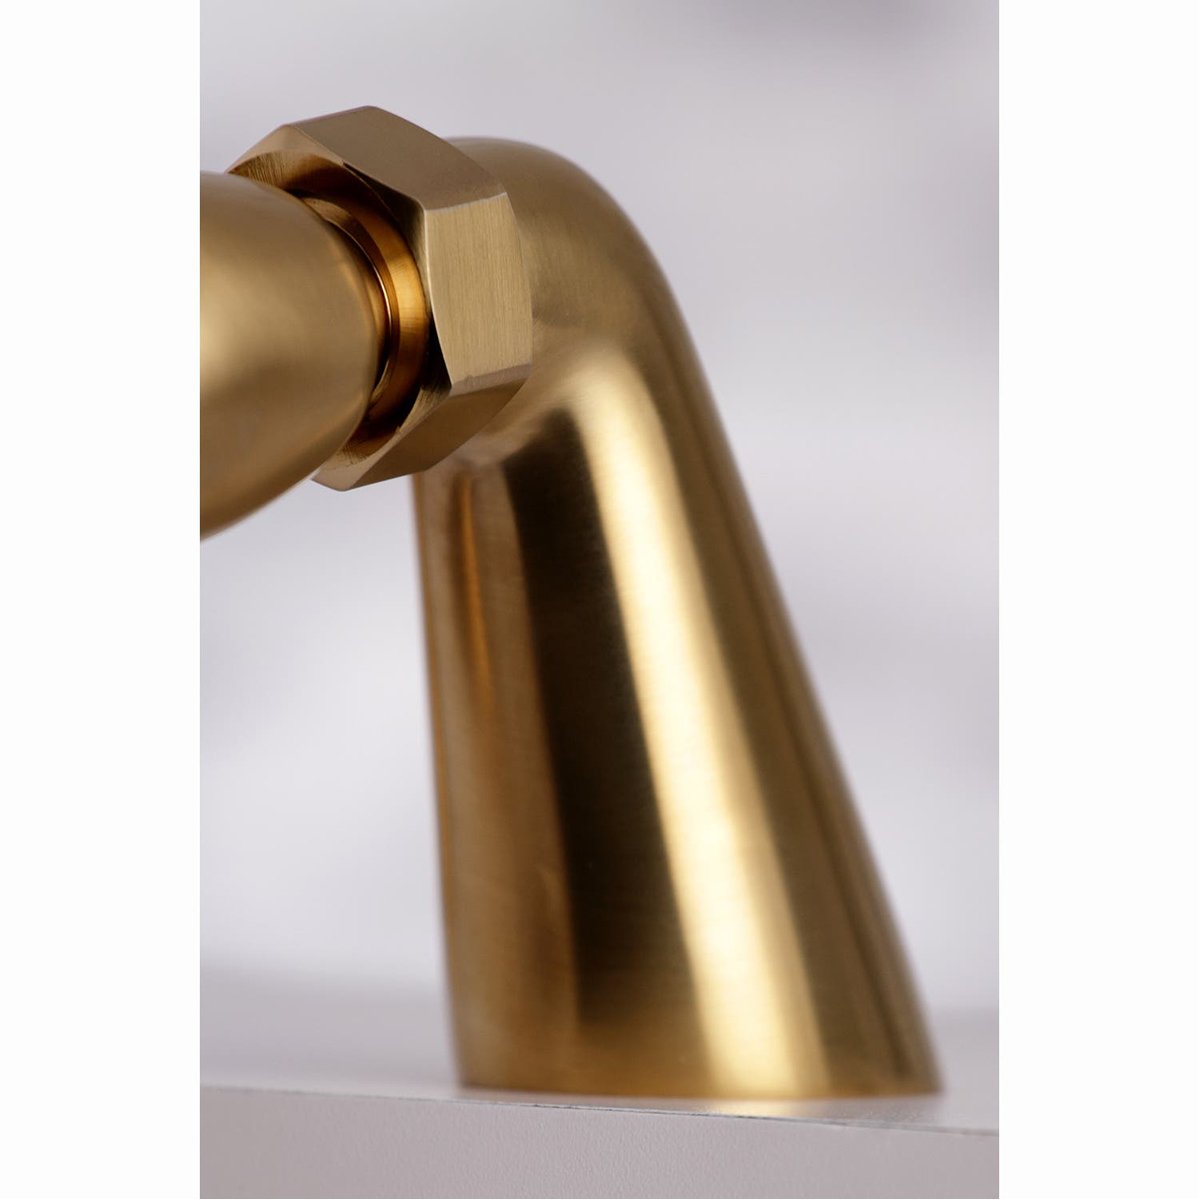 Kingston Brass Essex 6" Centers Deck Mount Clawfoot Tub Filler with Hand Shower